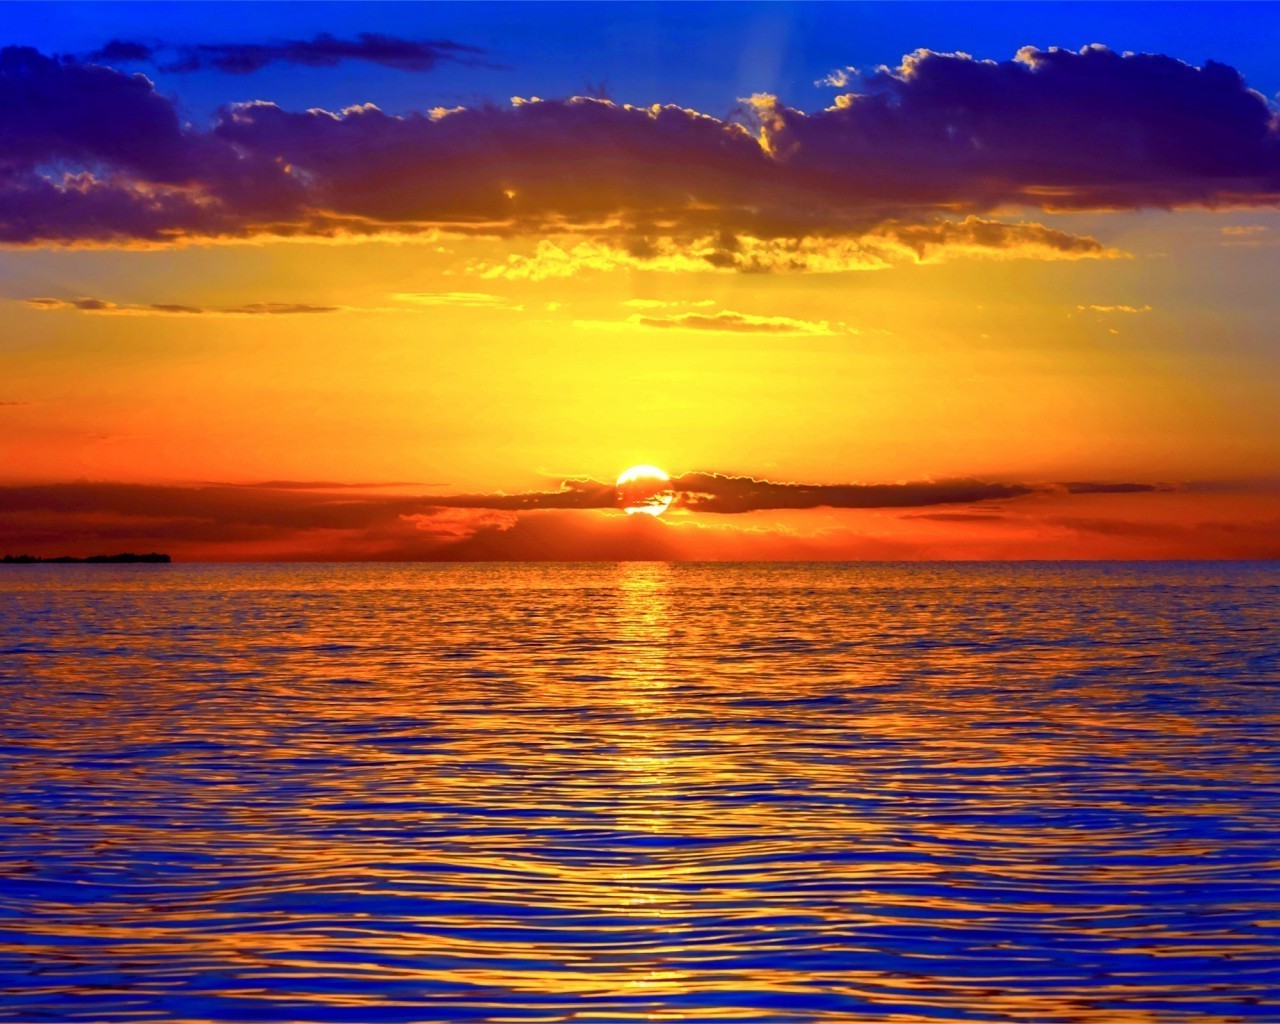 the sunset and sunrise sunset dawn sun water dusk sea evening ocean reflection fair weather sky summer beach nature